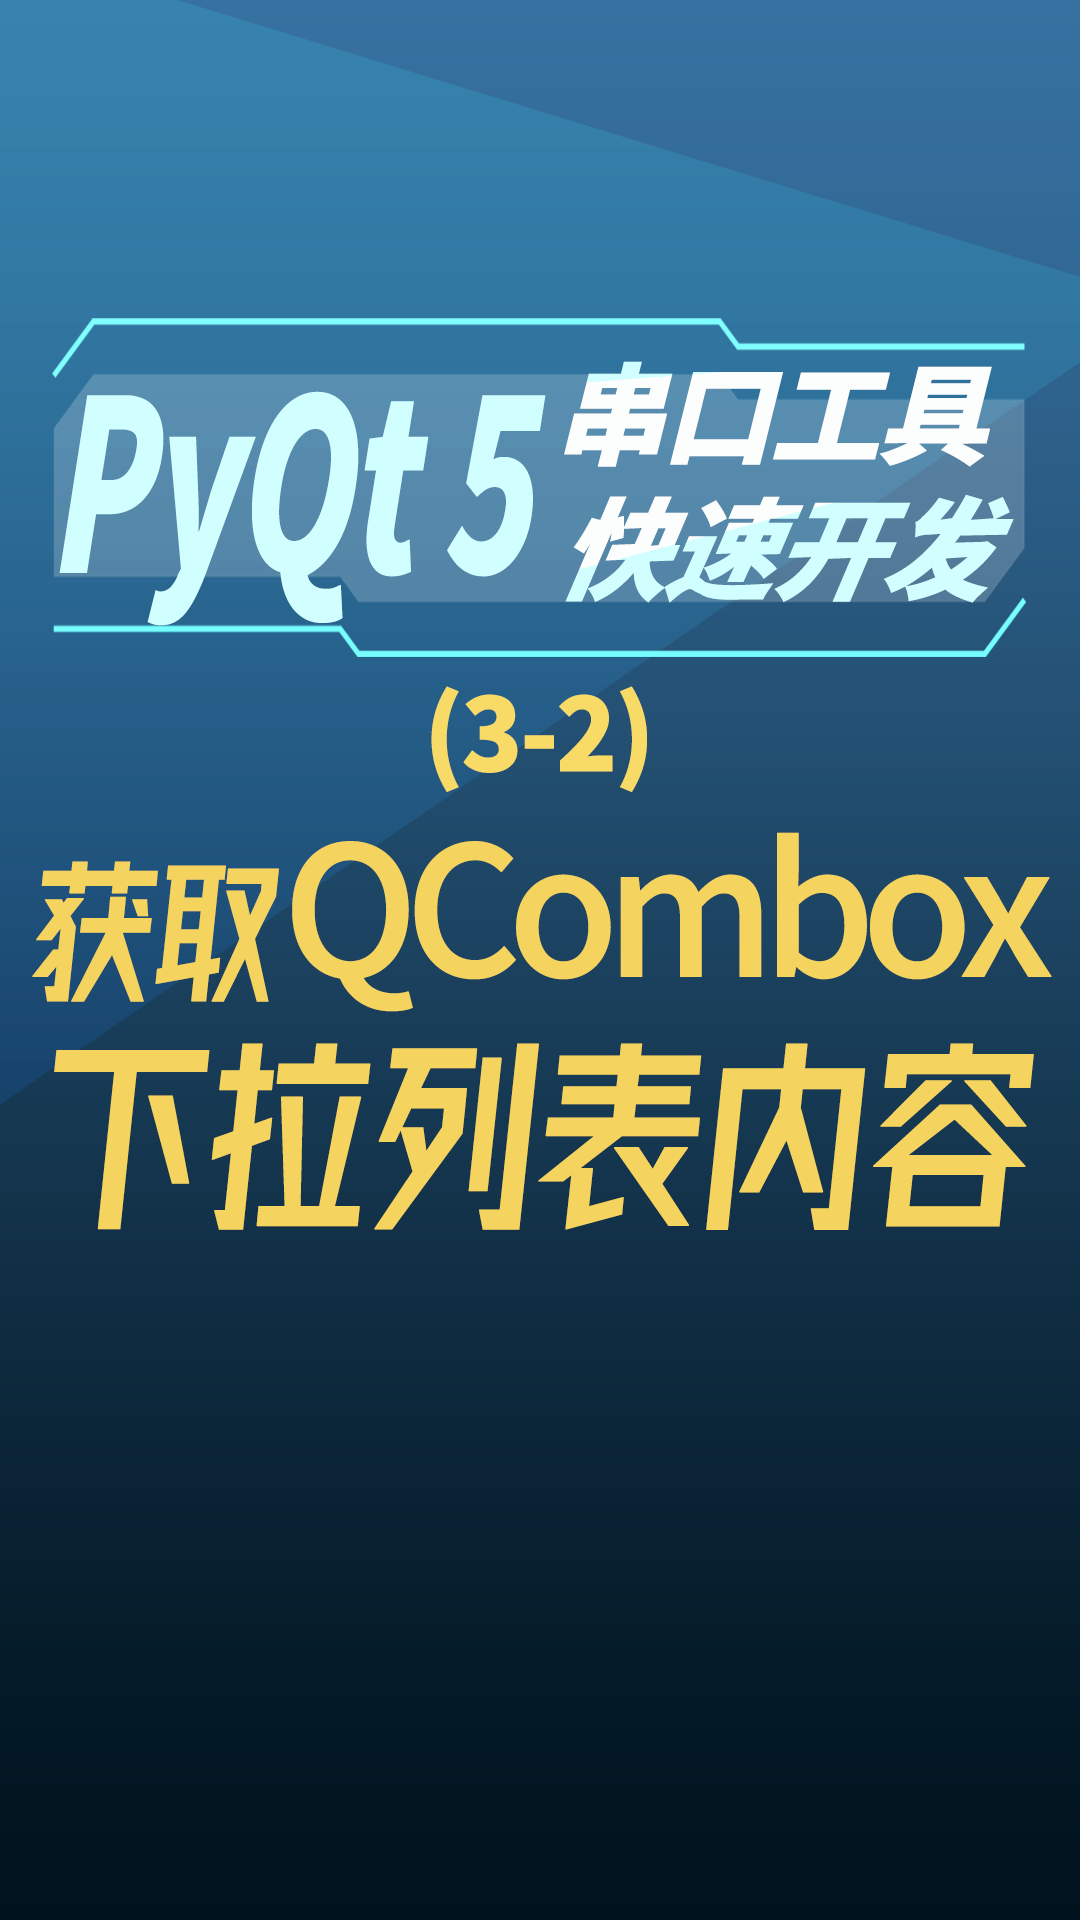 pyqt5串口工具快速开发3-2获取QCombox下拉列表内容#串口工具开发 